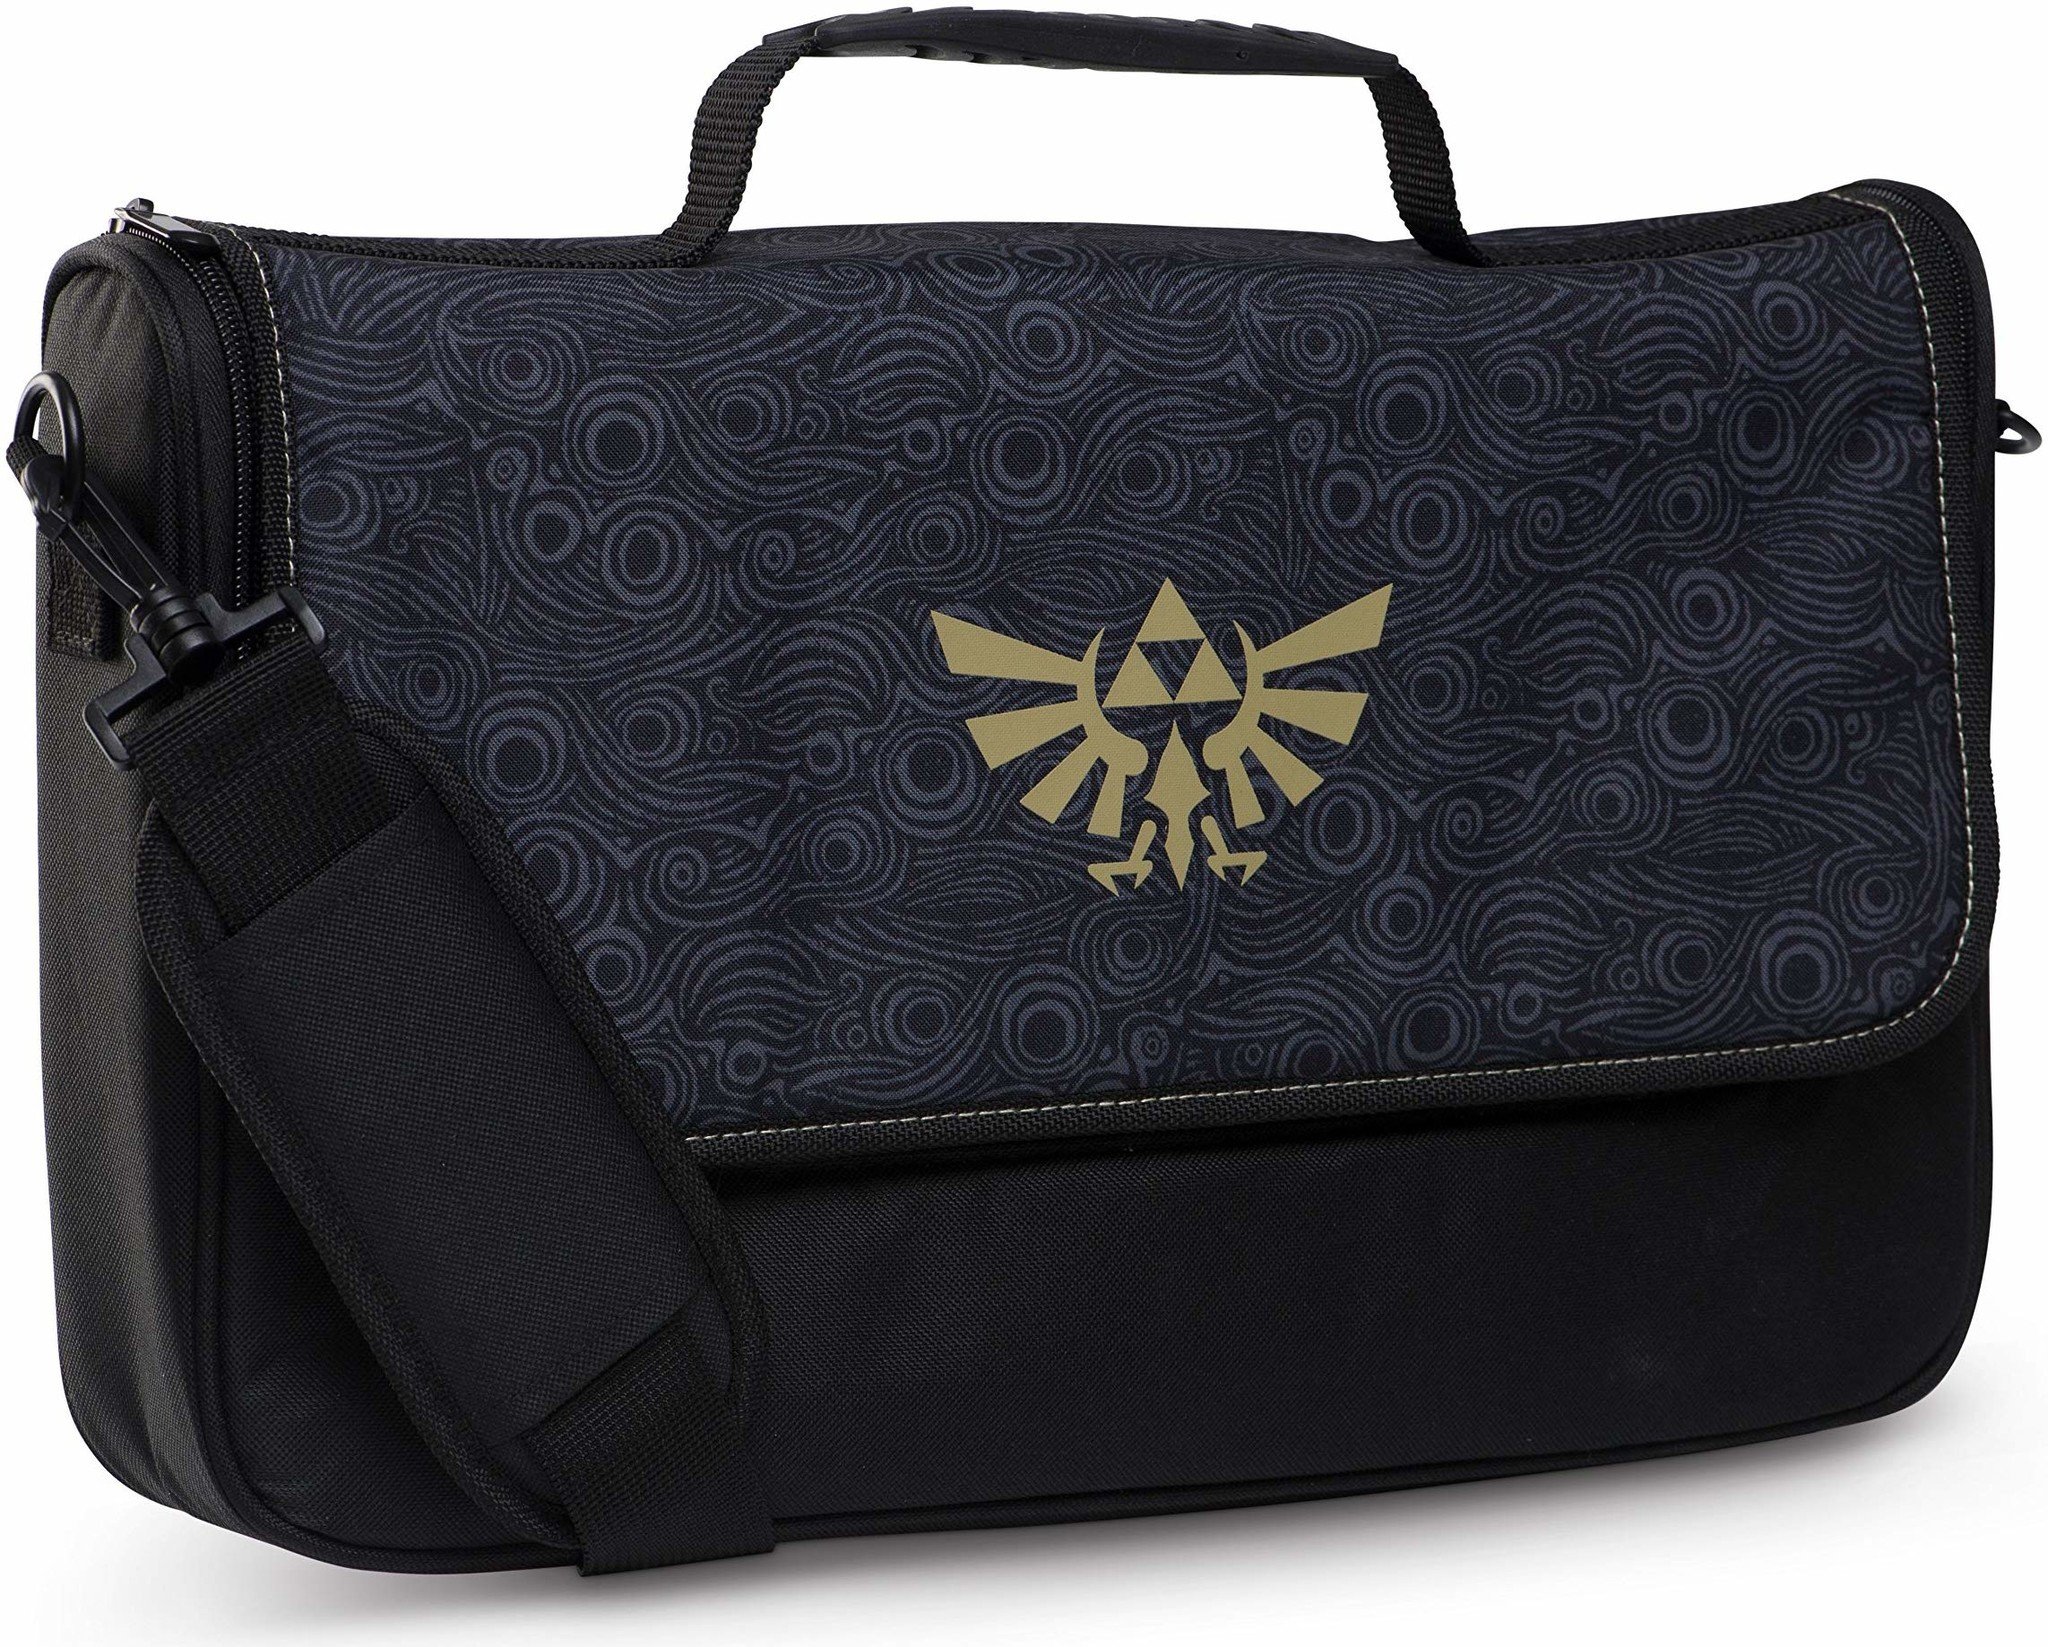 PowerA Zelda Messenger Bag